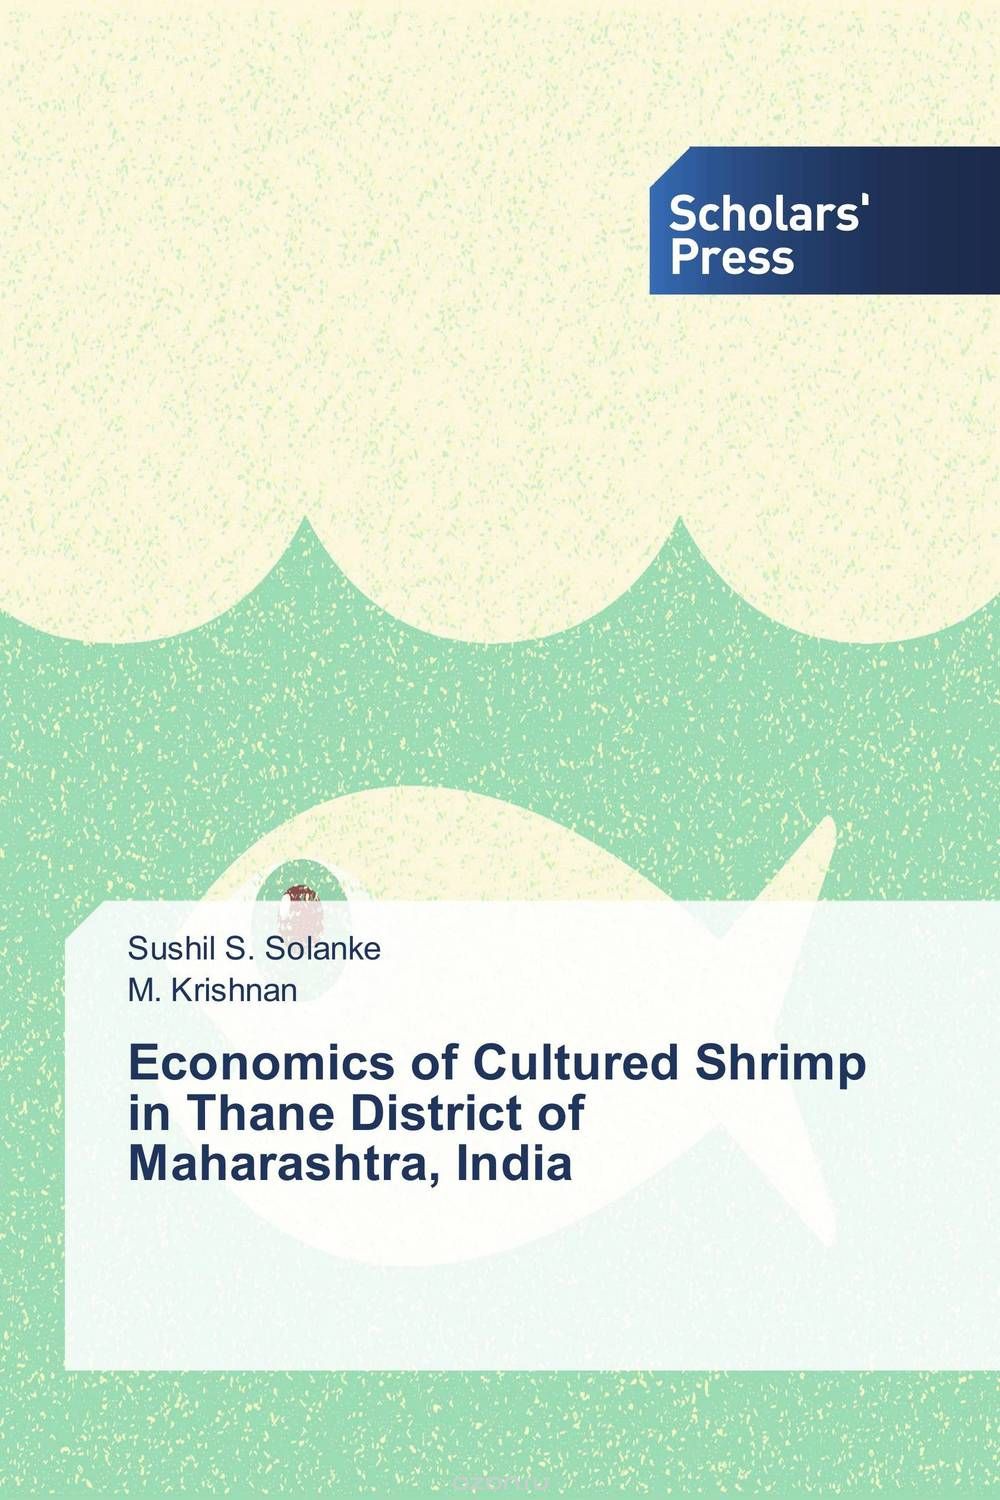 Economics of Cultured Shrimp in Thane District of Maharashtra, India